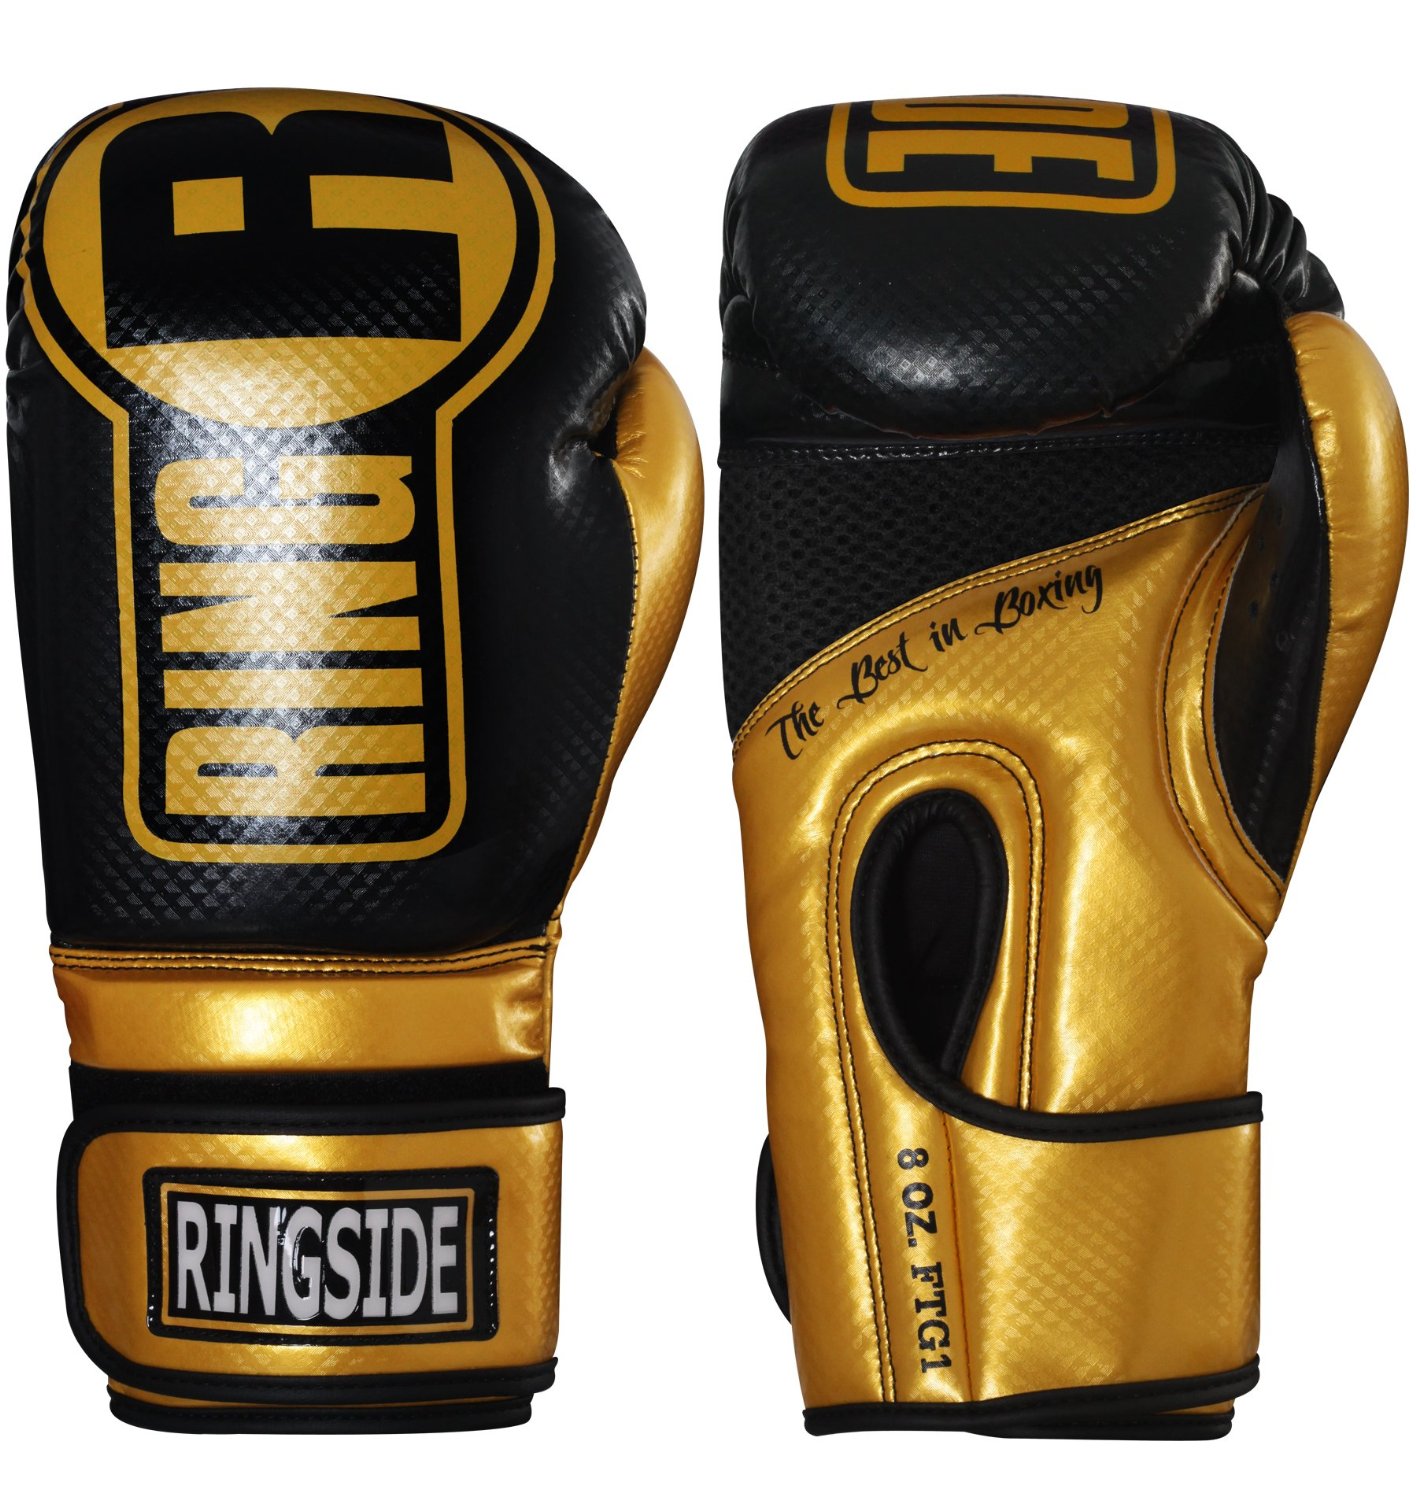 Ringside Boxing Gloves - black and gold